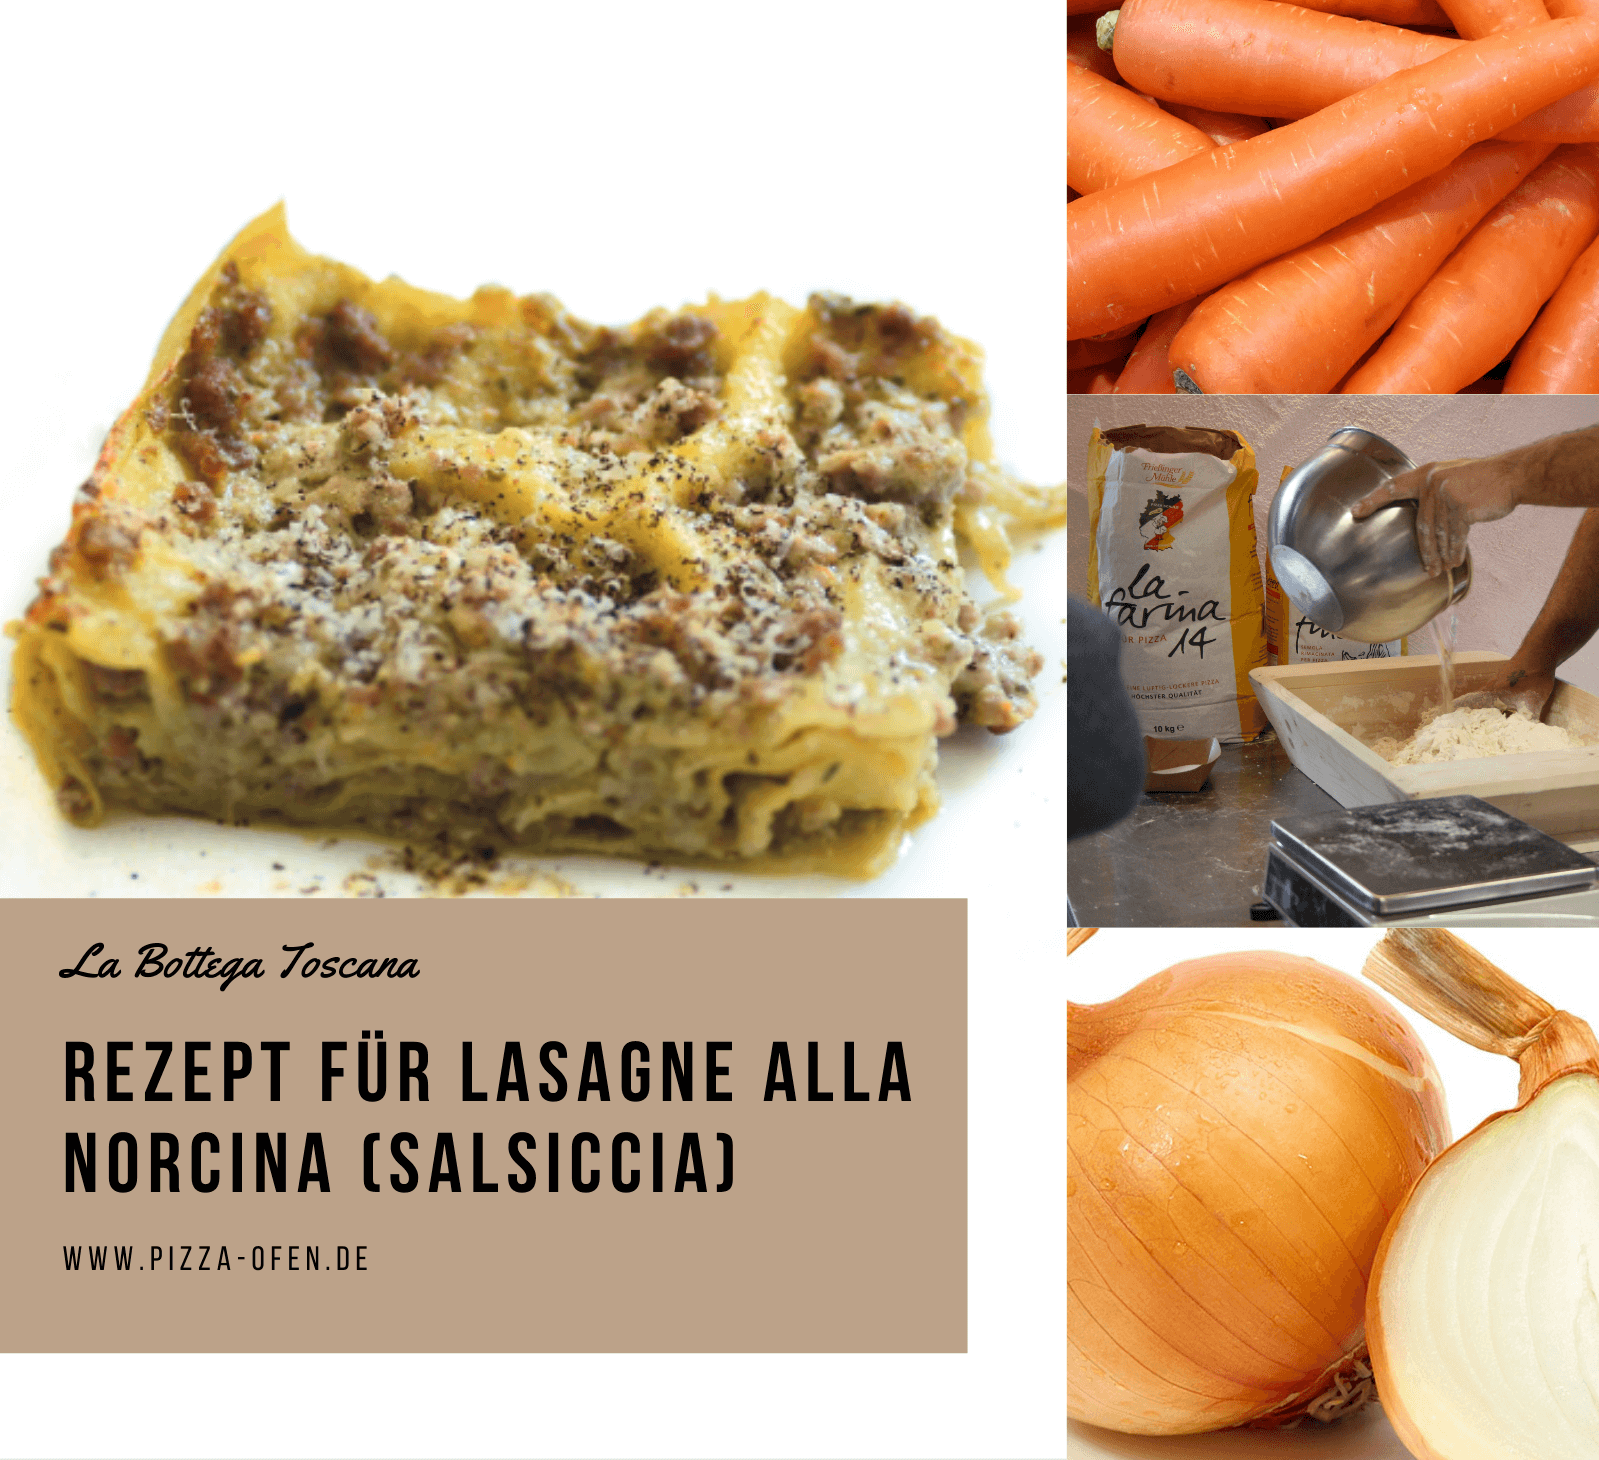 Rezept: Lasagne alla Norcina (Salsiccia)